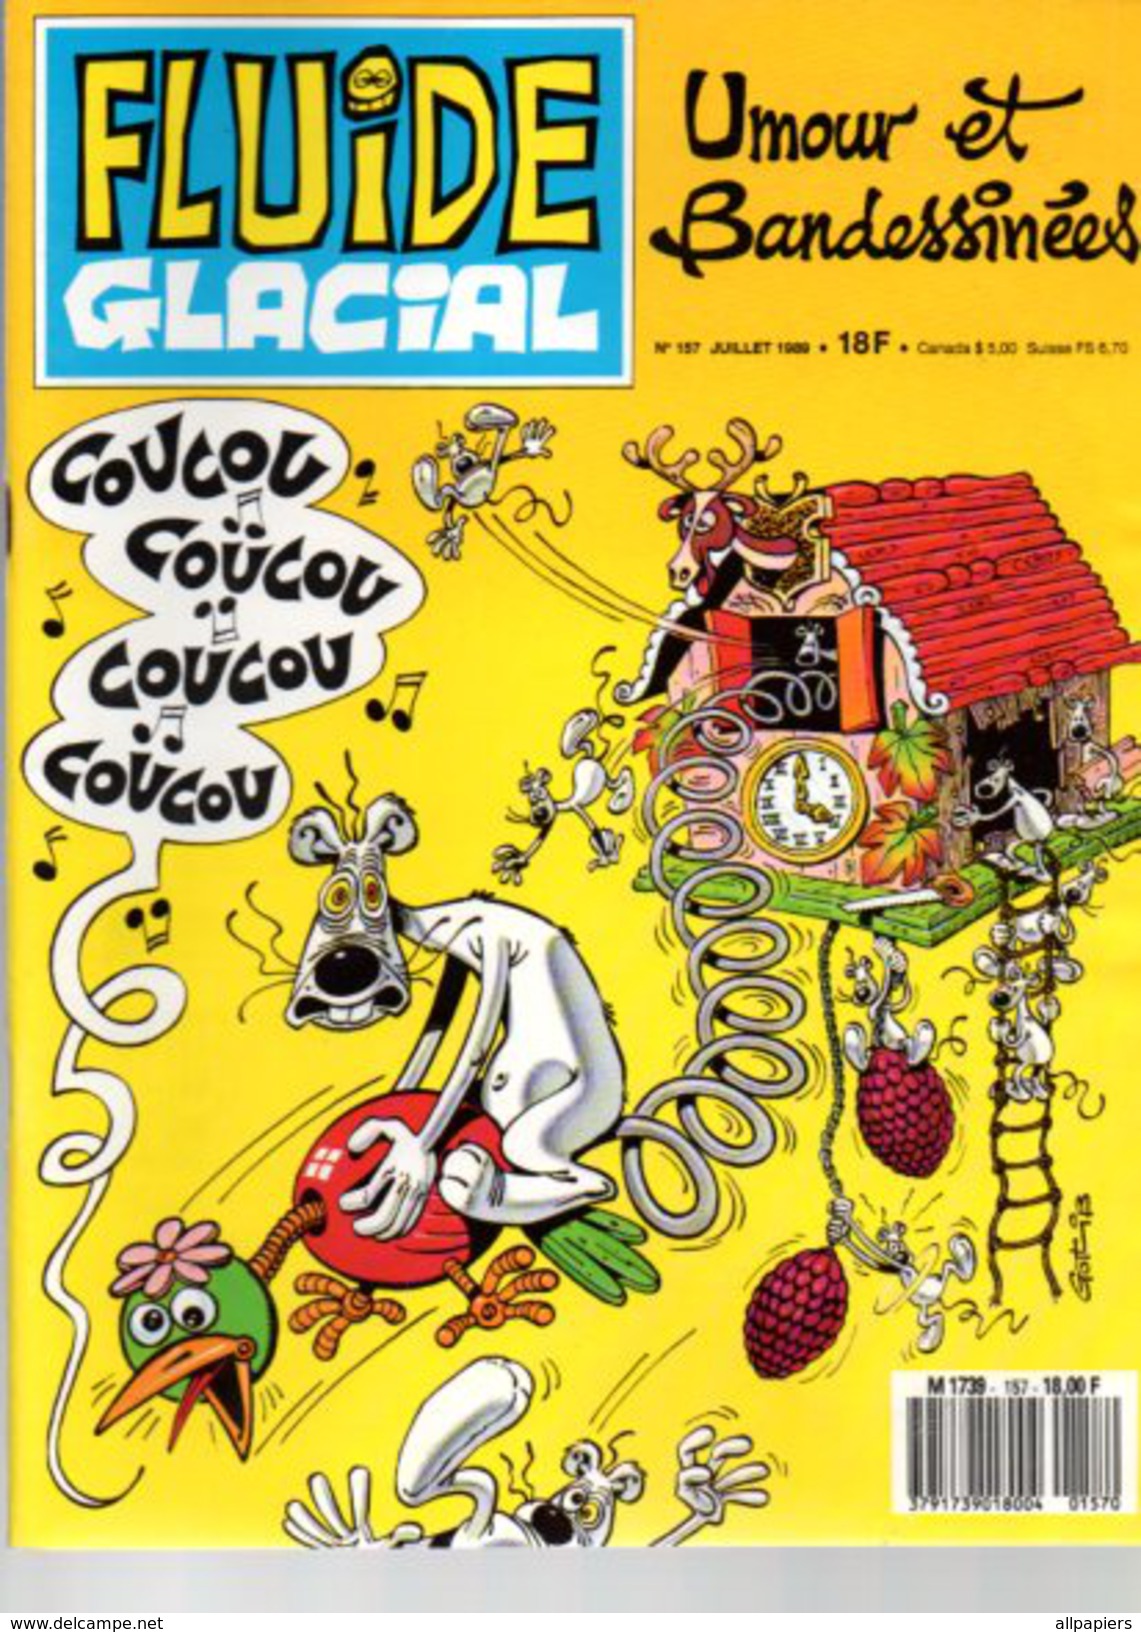 Fluide Glacial N°157 Absurdus Delirium - Gotlib - Edika - Fremion - Hugot - Goossens - Foerster - Leandri - Thiriet 1989 - Fluide Glacial